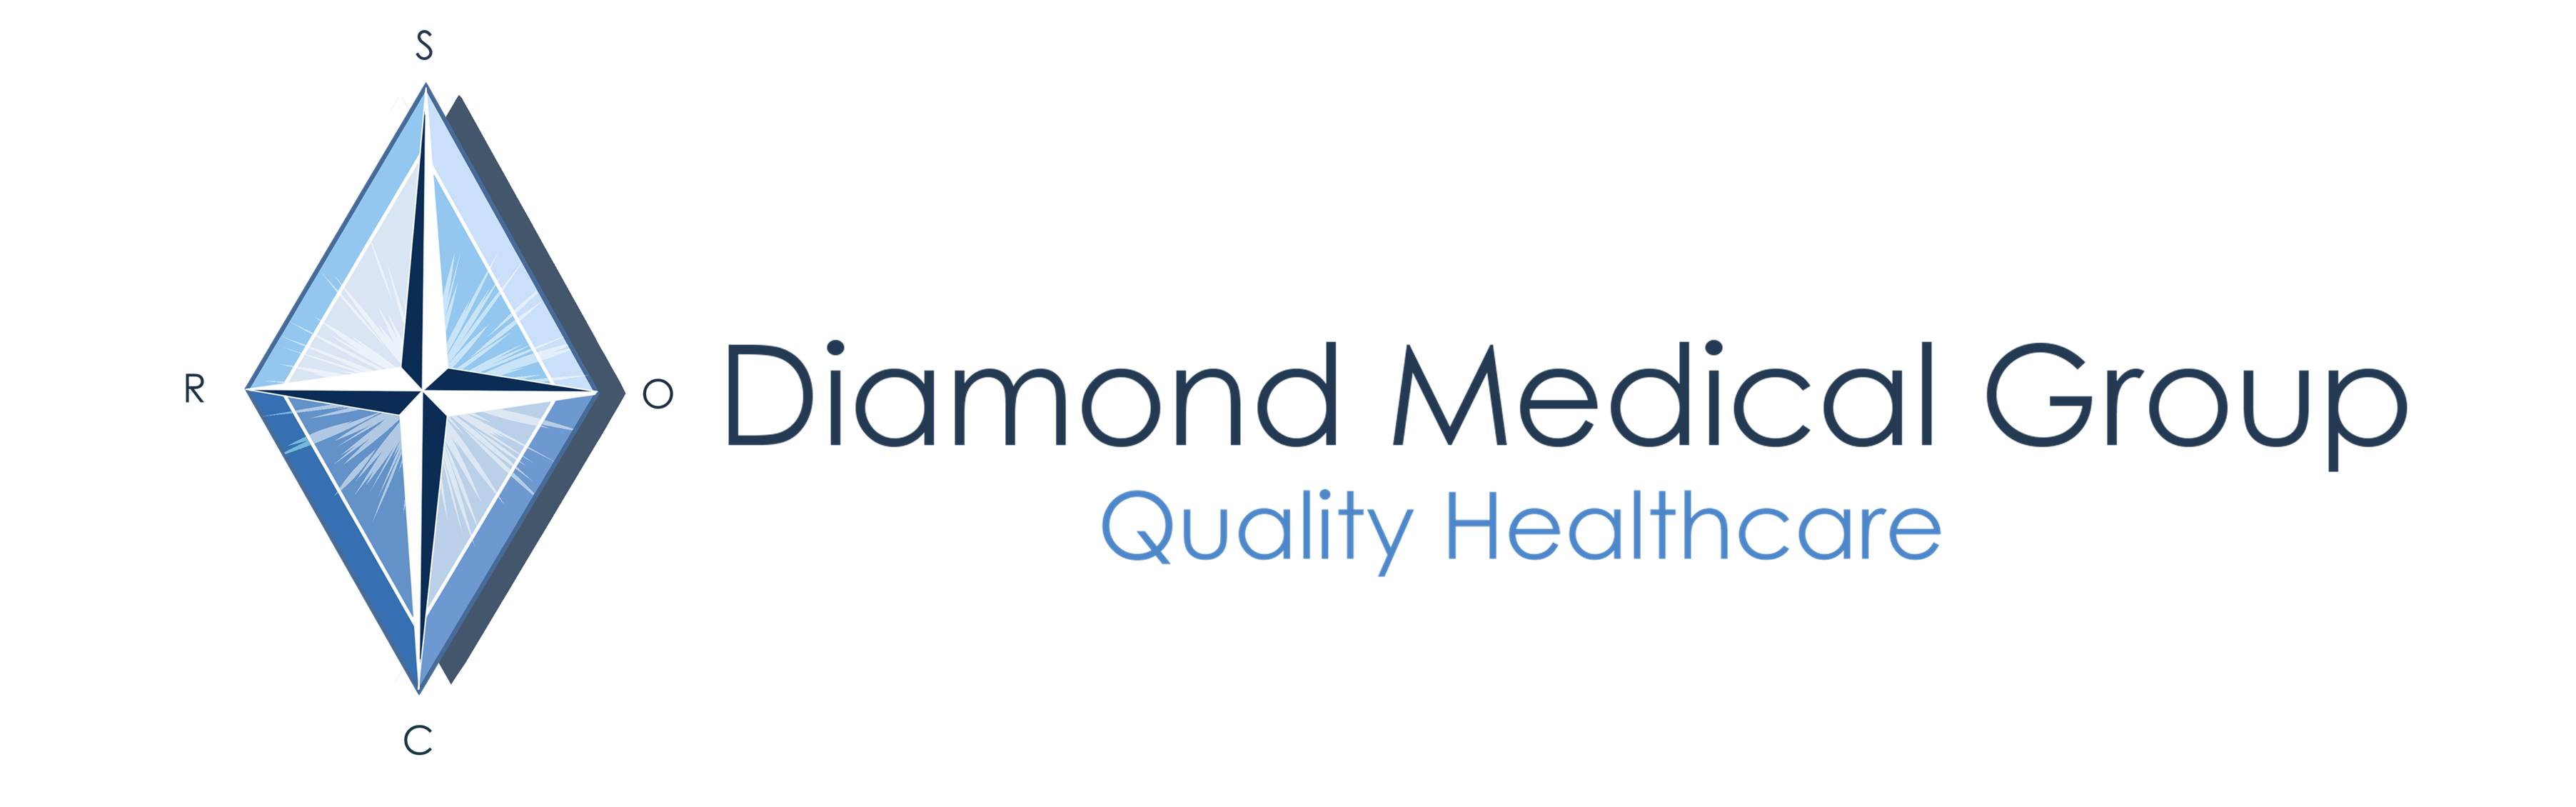 Diamond Medical Group